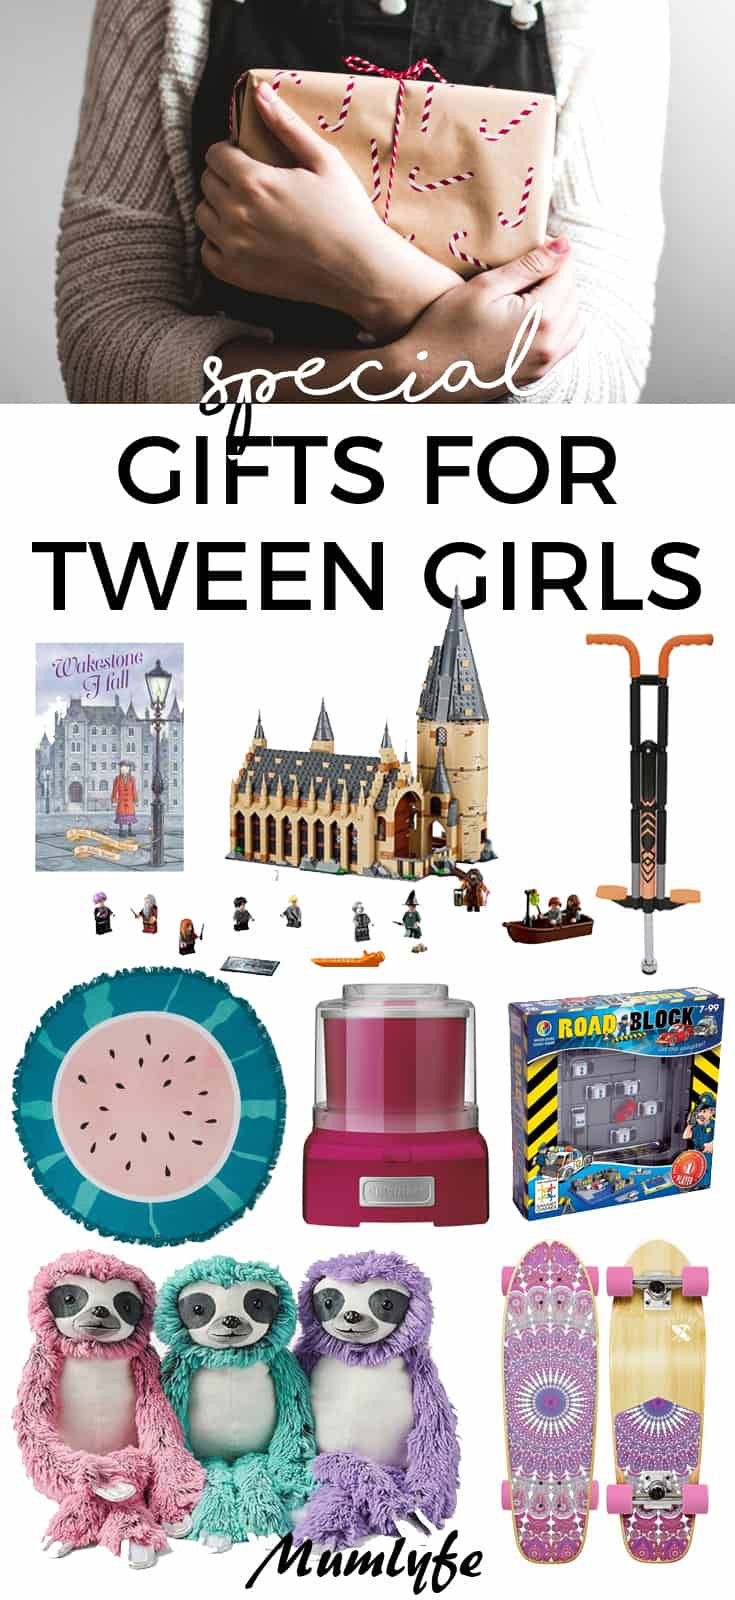 Tween Girls Christmas Gift Ideas
 Special t ideas for tween girls best t list for